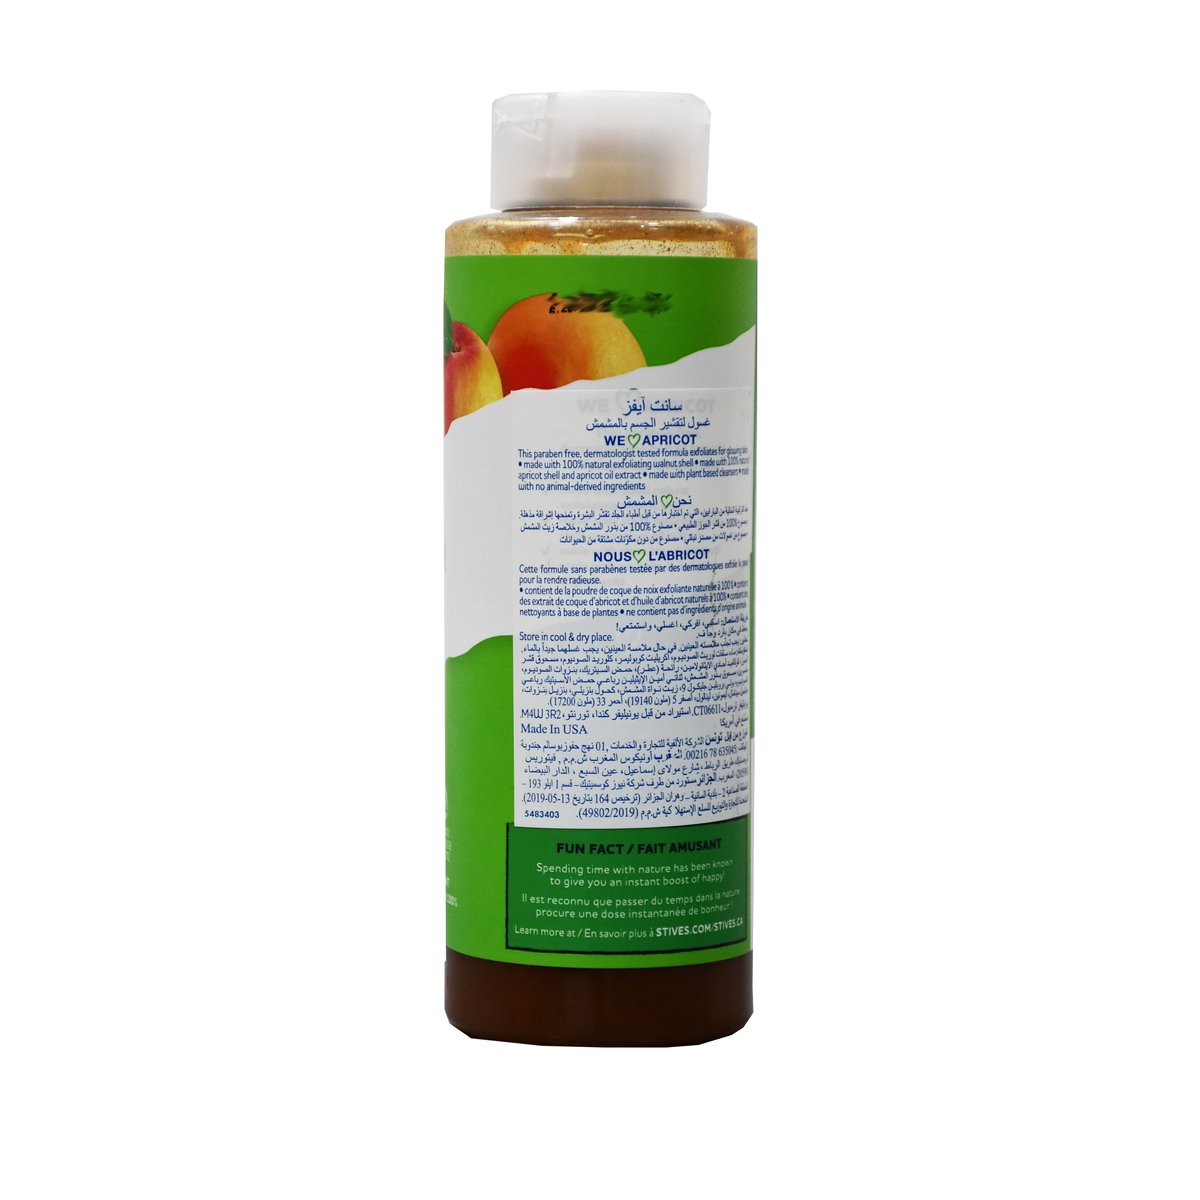 St. Ives Exfoliating Body Wash Apricot 473ml 1+1